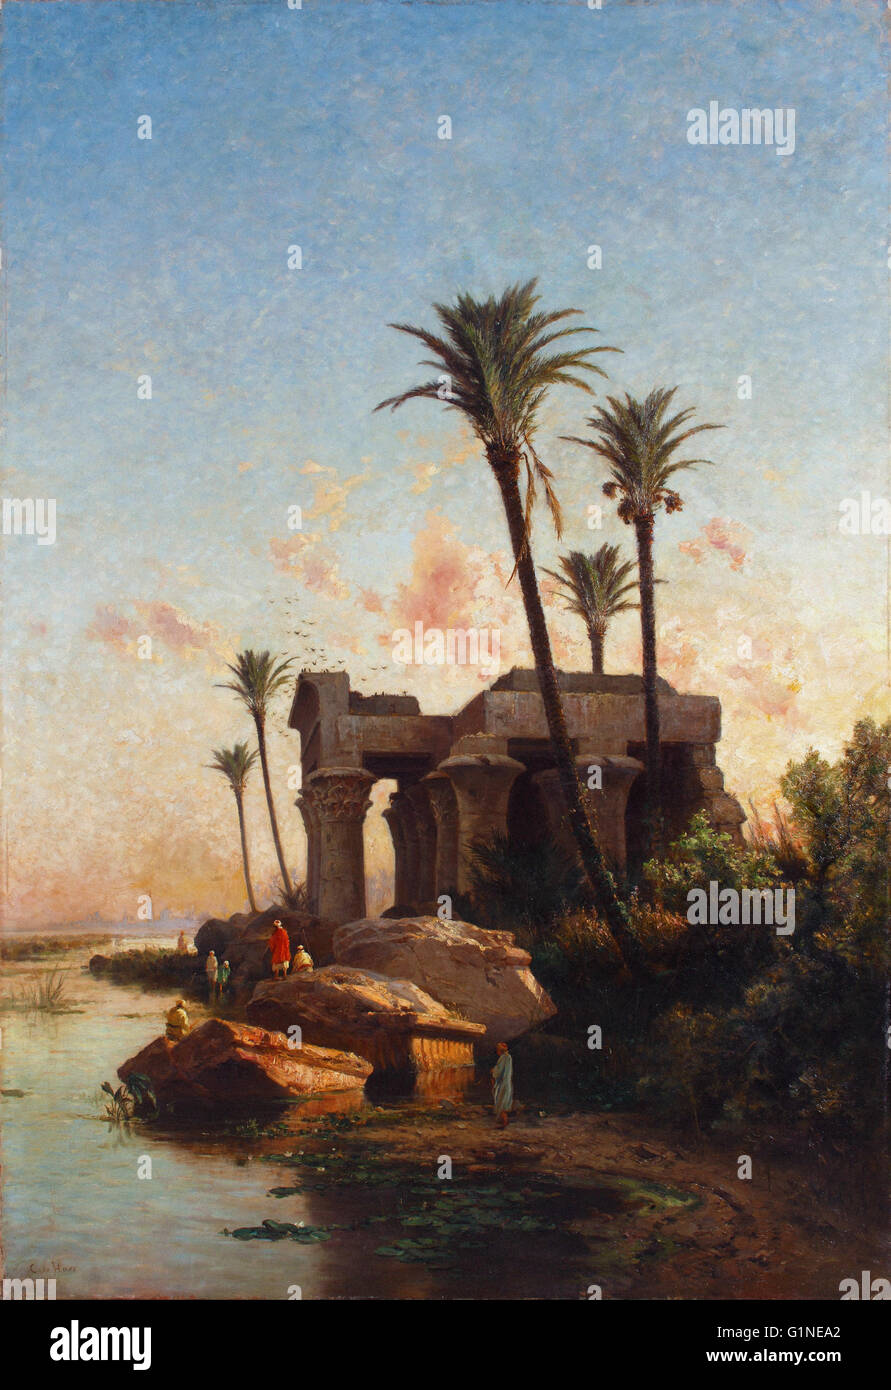 Carlos de Haes - Egypcian Landscape - Museo del Romanticismo, Madrid Stock Photo